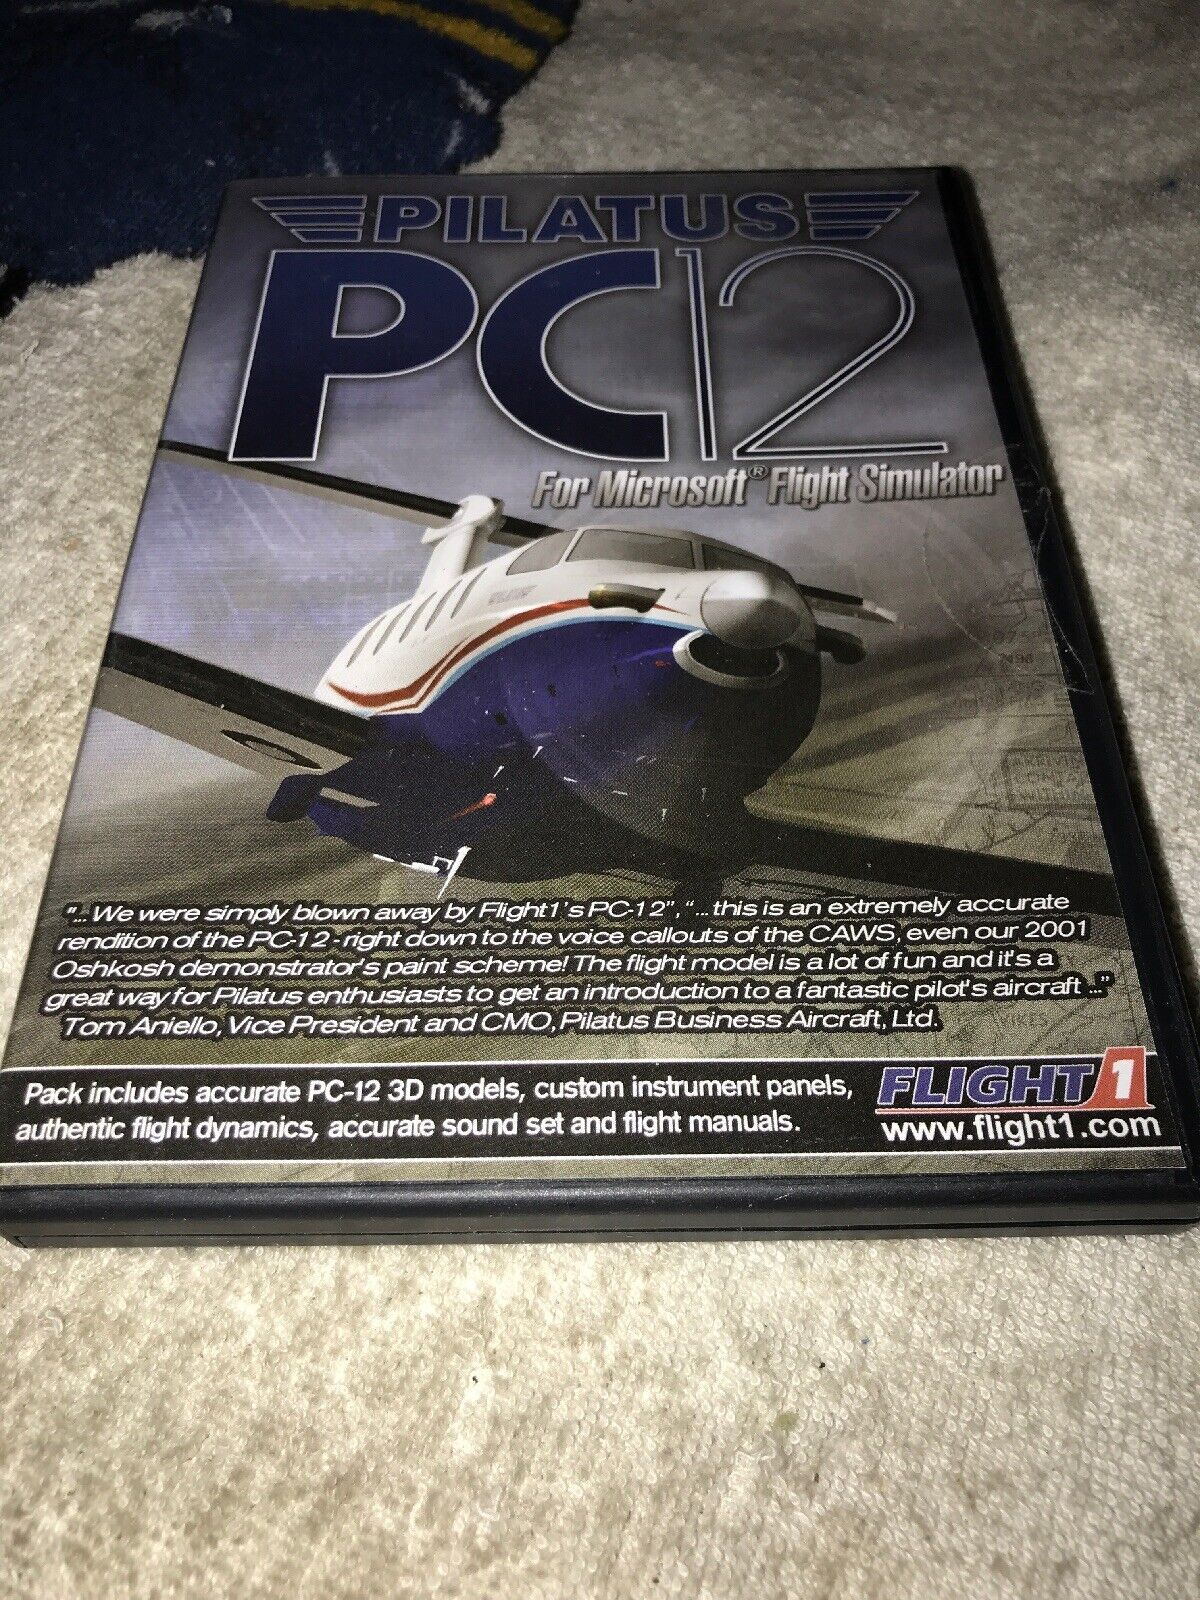 Pilatus PC12 Flight 1 For Microsoft Flight Simulator Software CD In Case Manual